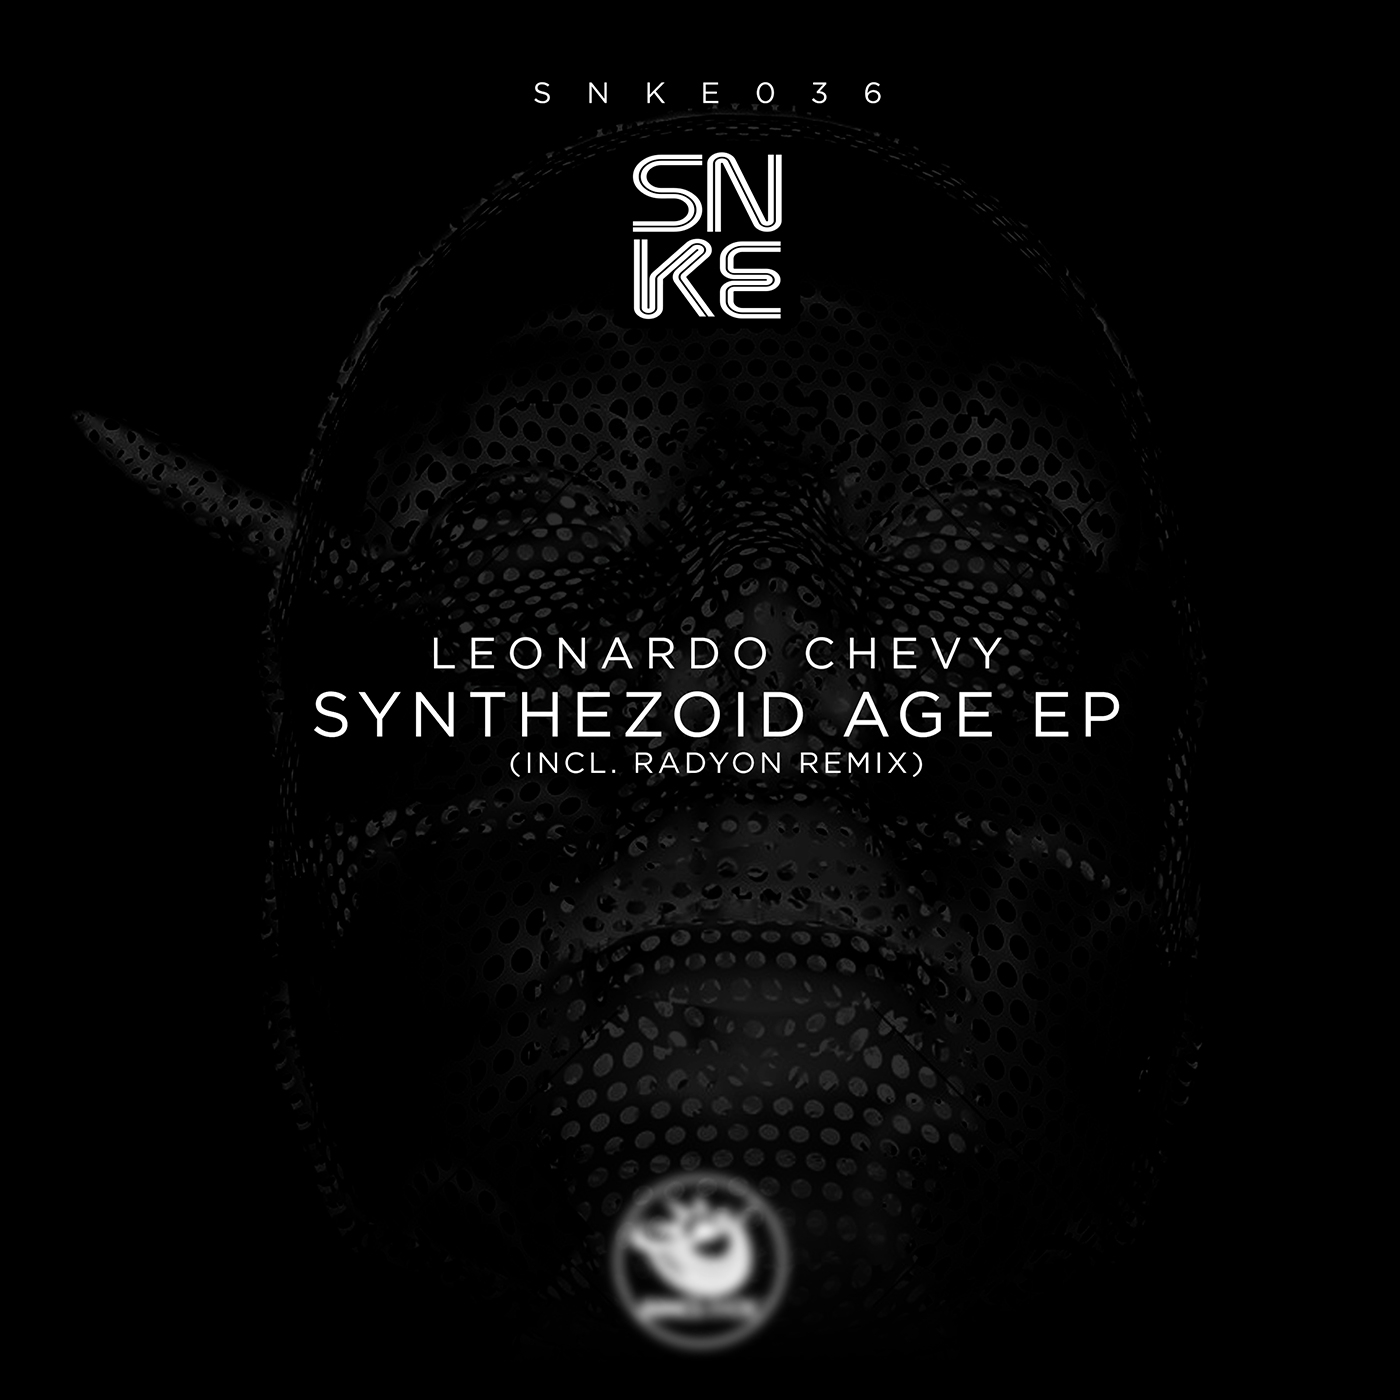 Leonardo Chevy - Synthezoid Age Ep - SNKE036 Cover